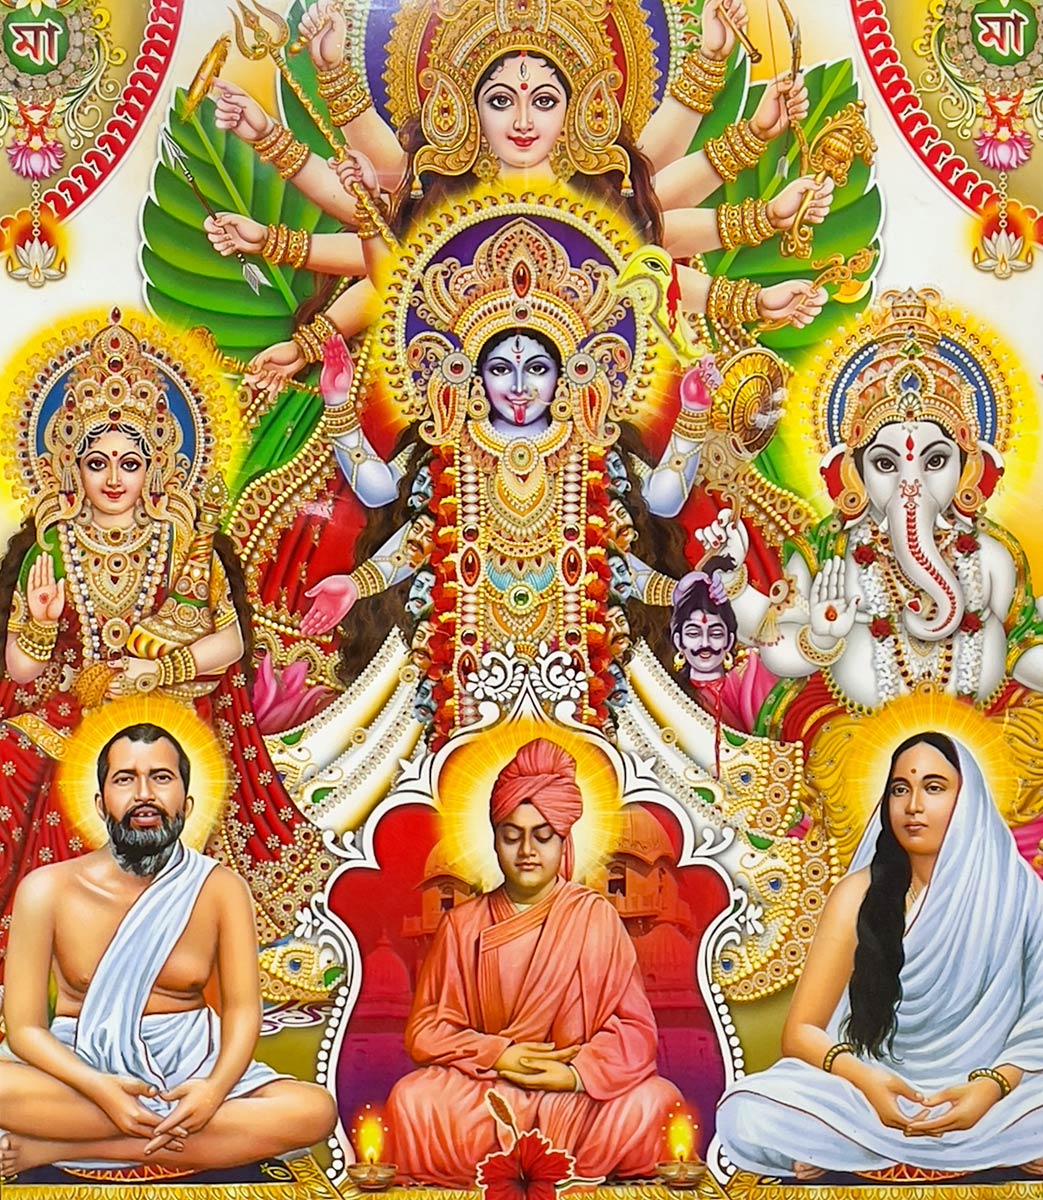 Juliste, jossa jumalatar Tara Ganeshin, Sri Ramakrishnan, Vivekanandan ja Sarada Devin kanssa, Ma Tara -temppeli, Tarapeeth